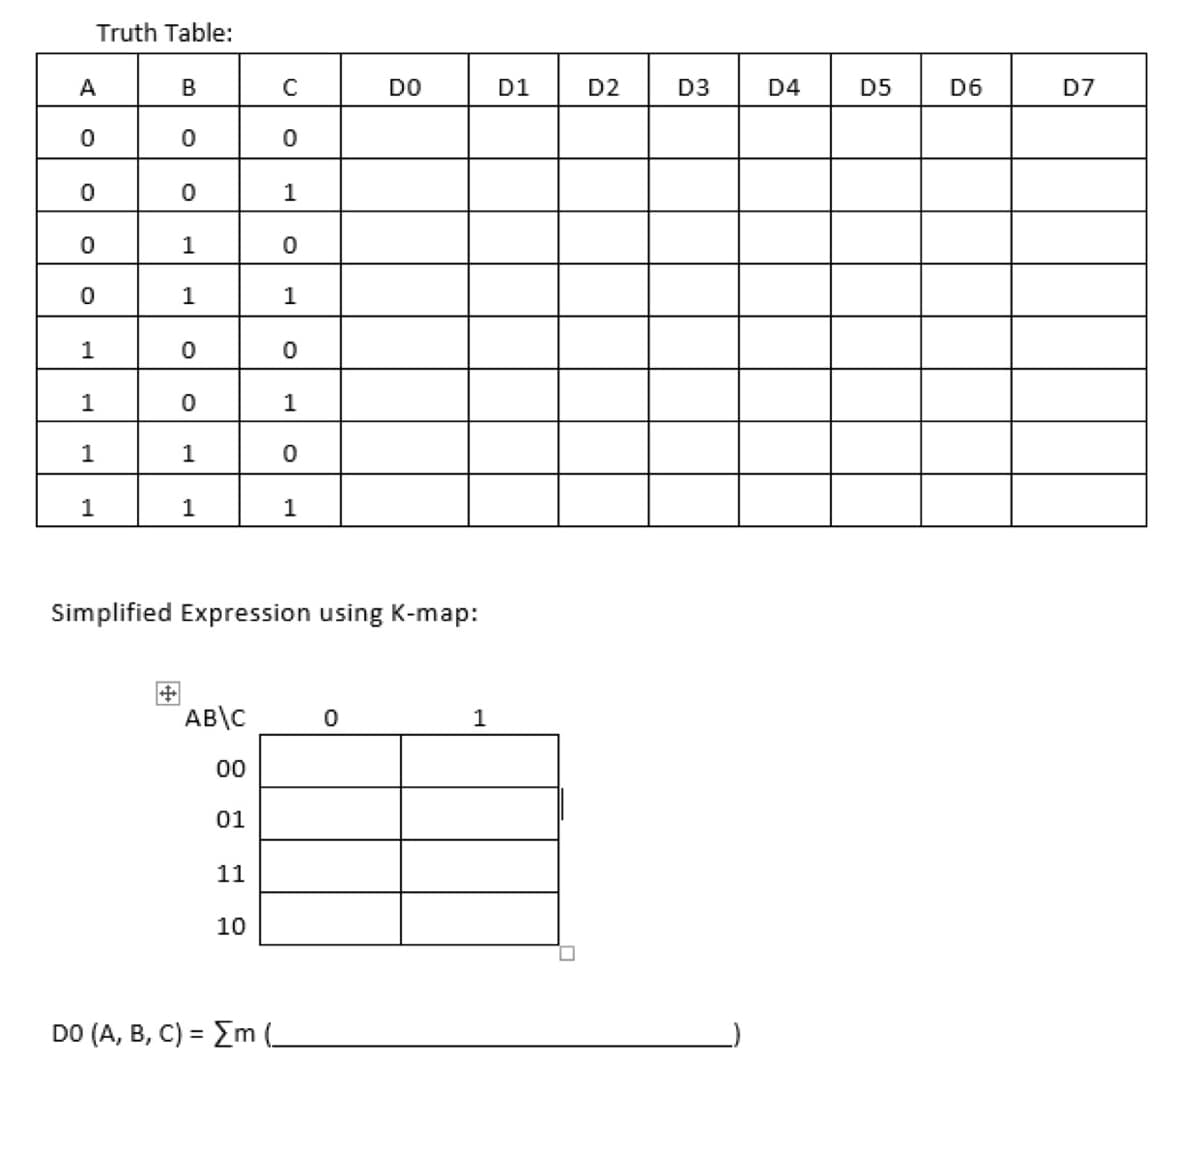 Truth Table:
A
DO
D1
D2
D3
D4
D5
D6
D7
1
1
1
1
1
1
1
1
1
1
Simplified Expression using K-map:
AB\C
1
00
01
11
10
DO (A, B, C) = Em (_
